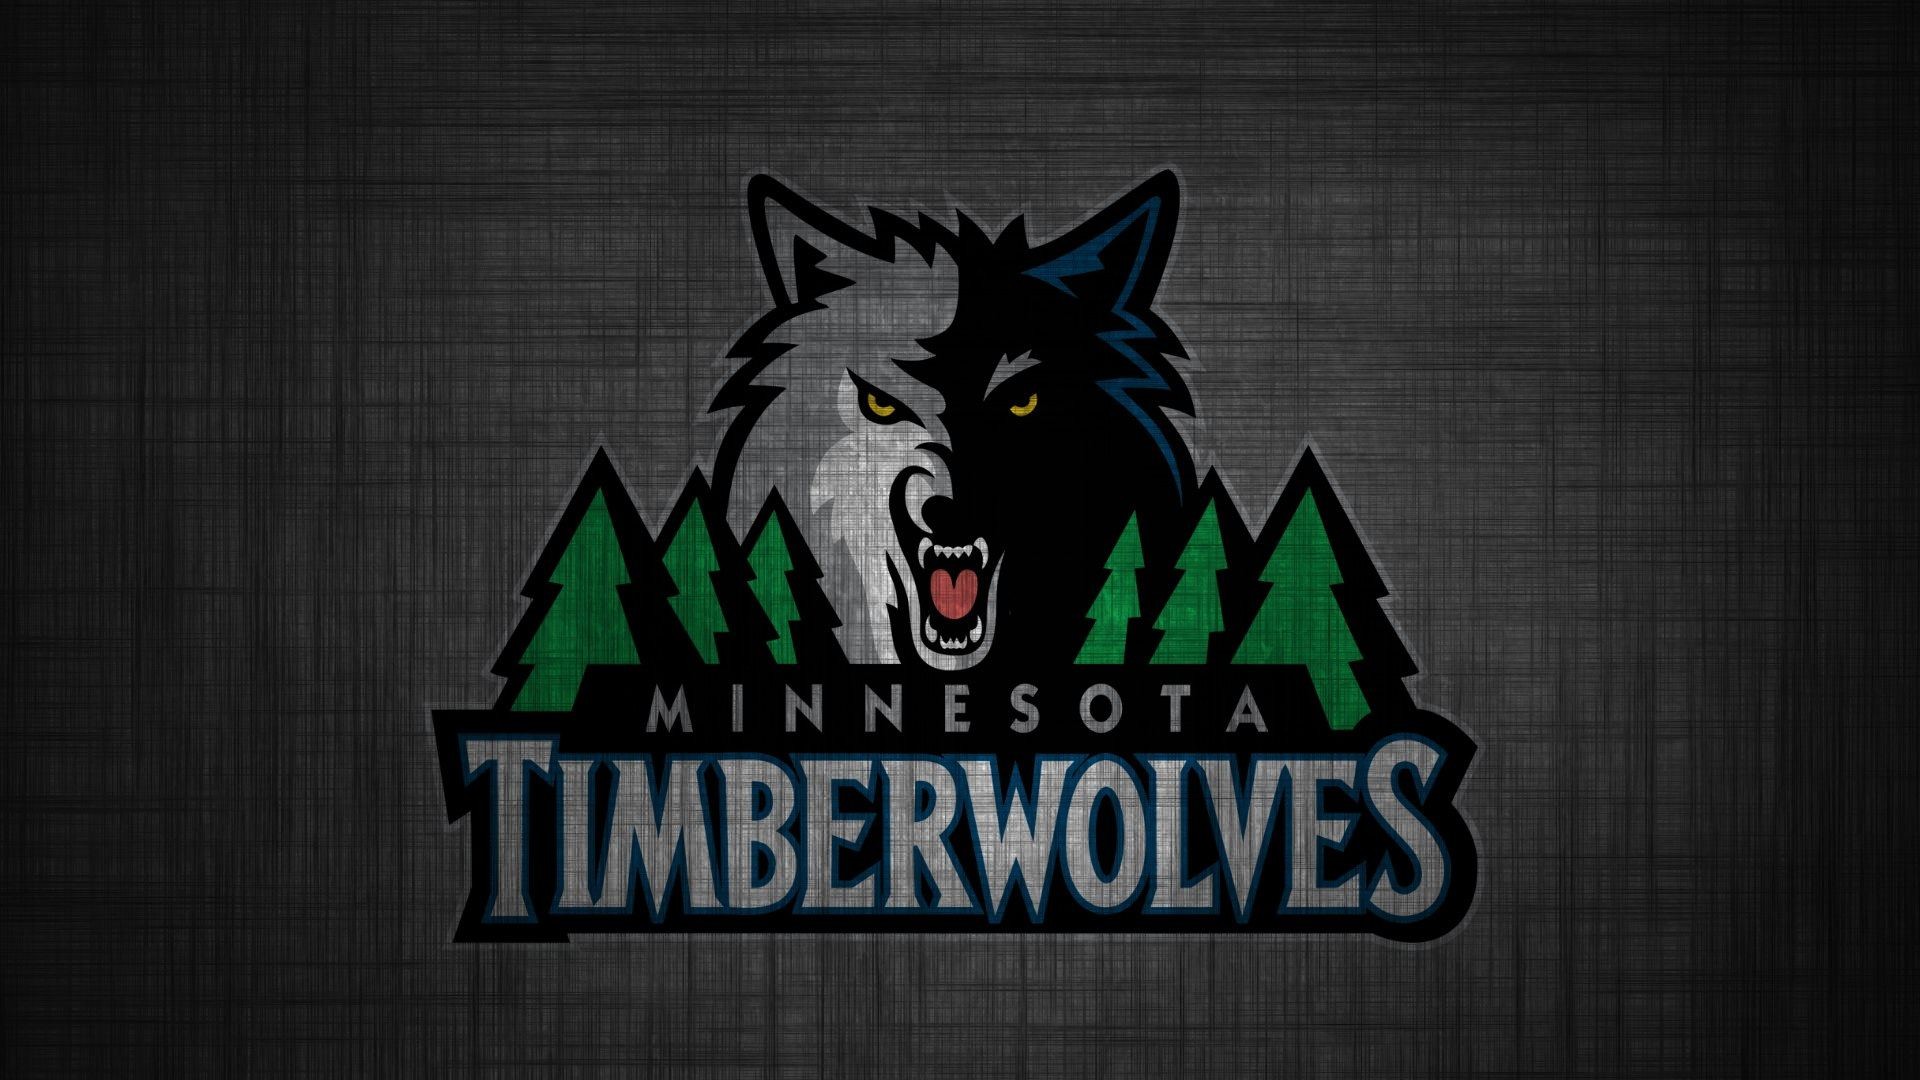 1920x1080 Minnesota Timberwolves wallpaper hd free download